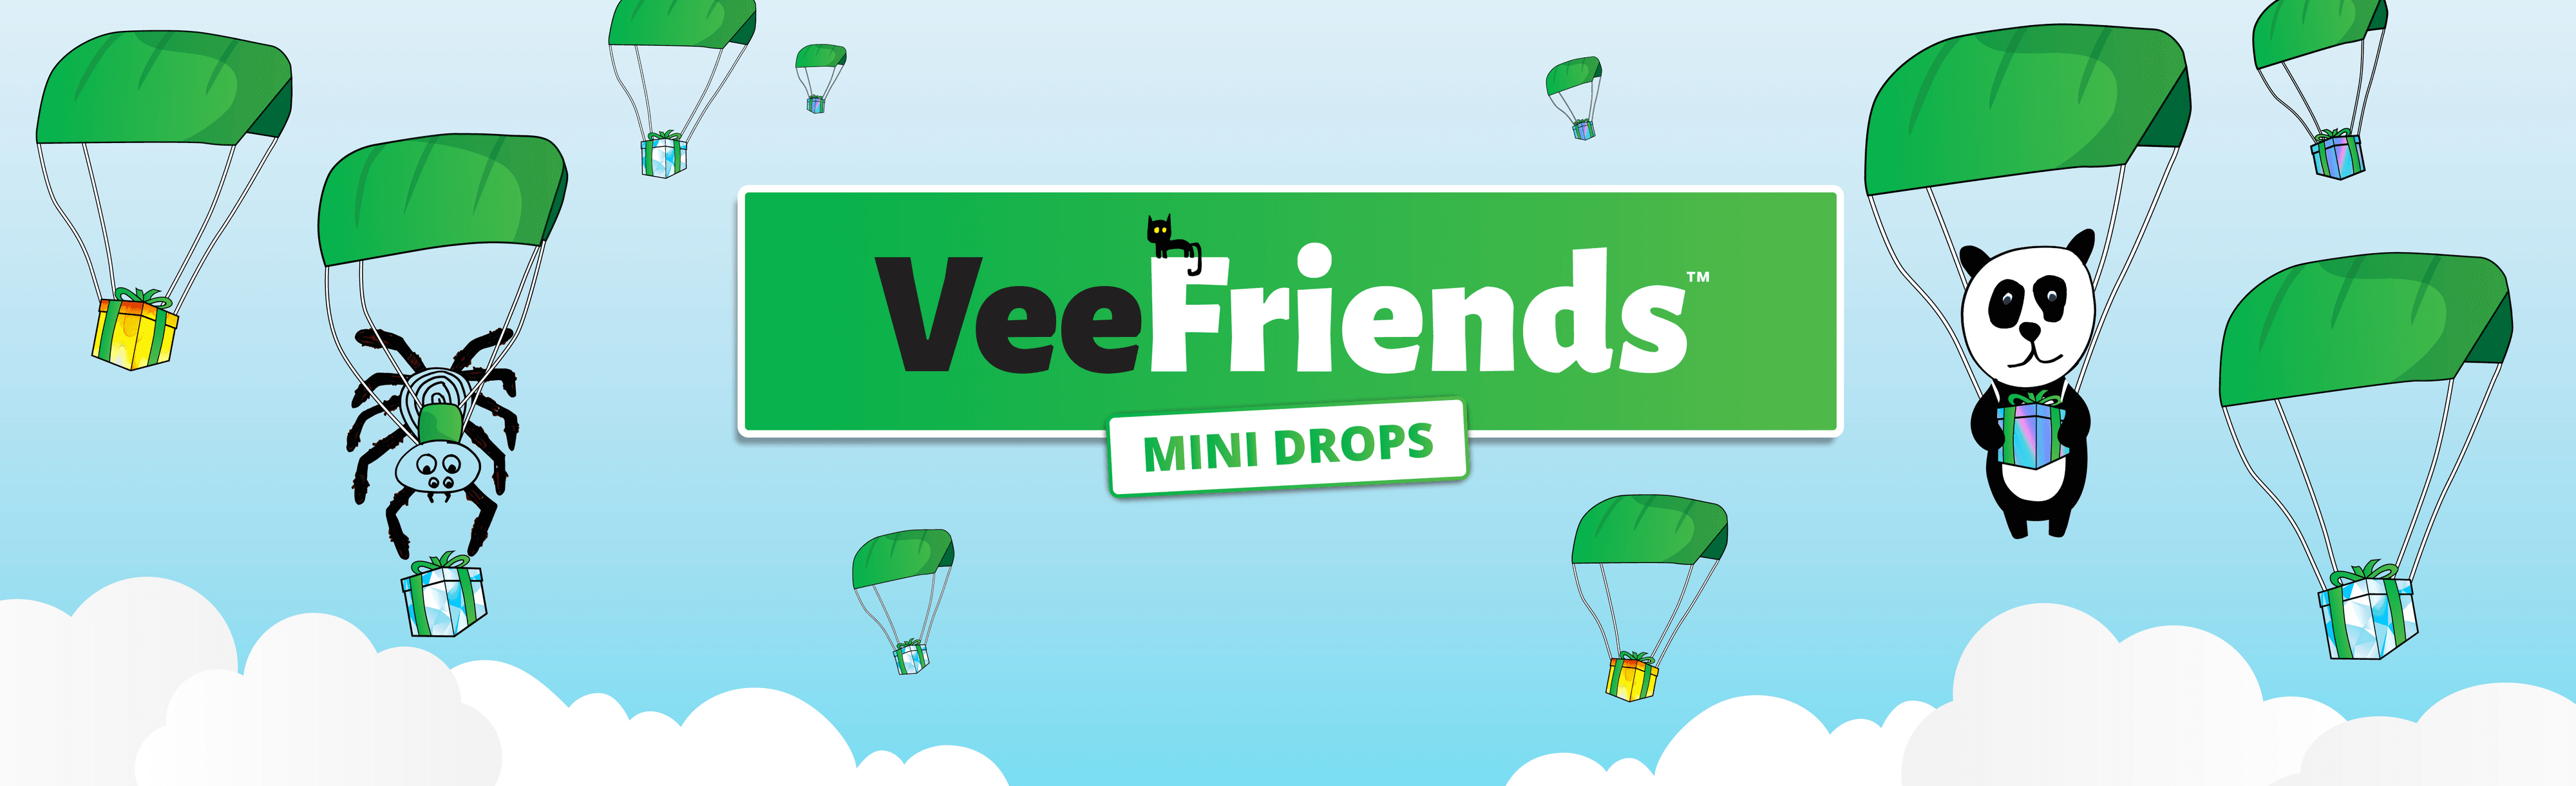 VeeFriends Mini Drops